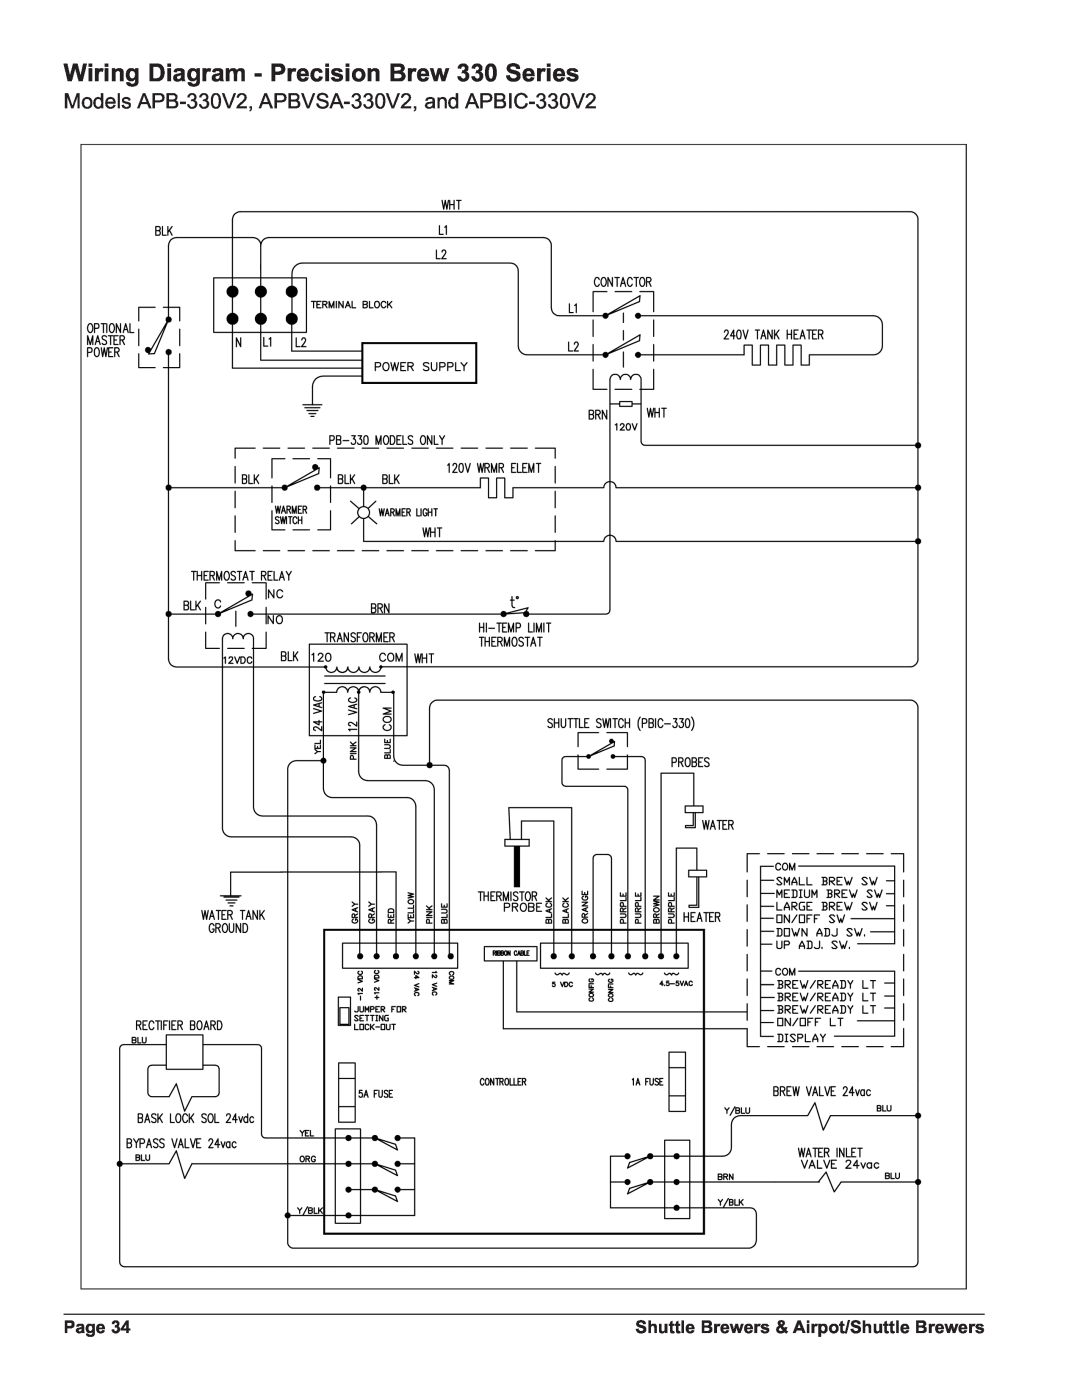 Grindmaster APBIC-330V2E230 Wiring Diagram - Precision Brew 330 Series, Models APB-330V2, APBVSA-330V2, and APBIC-330V2 